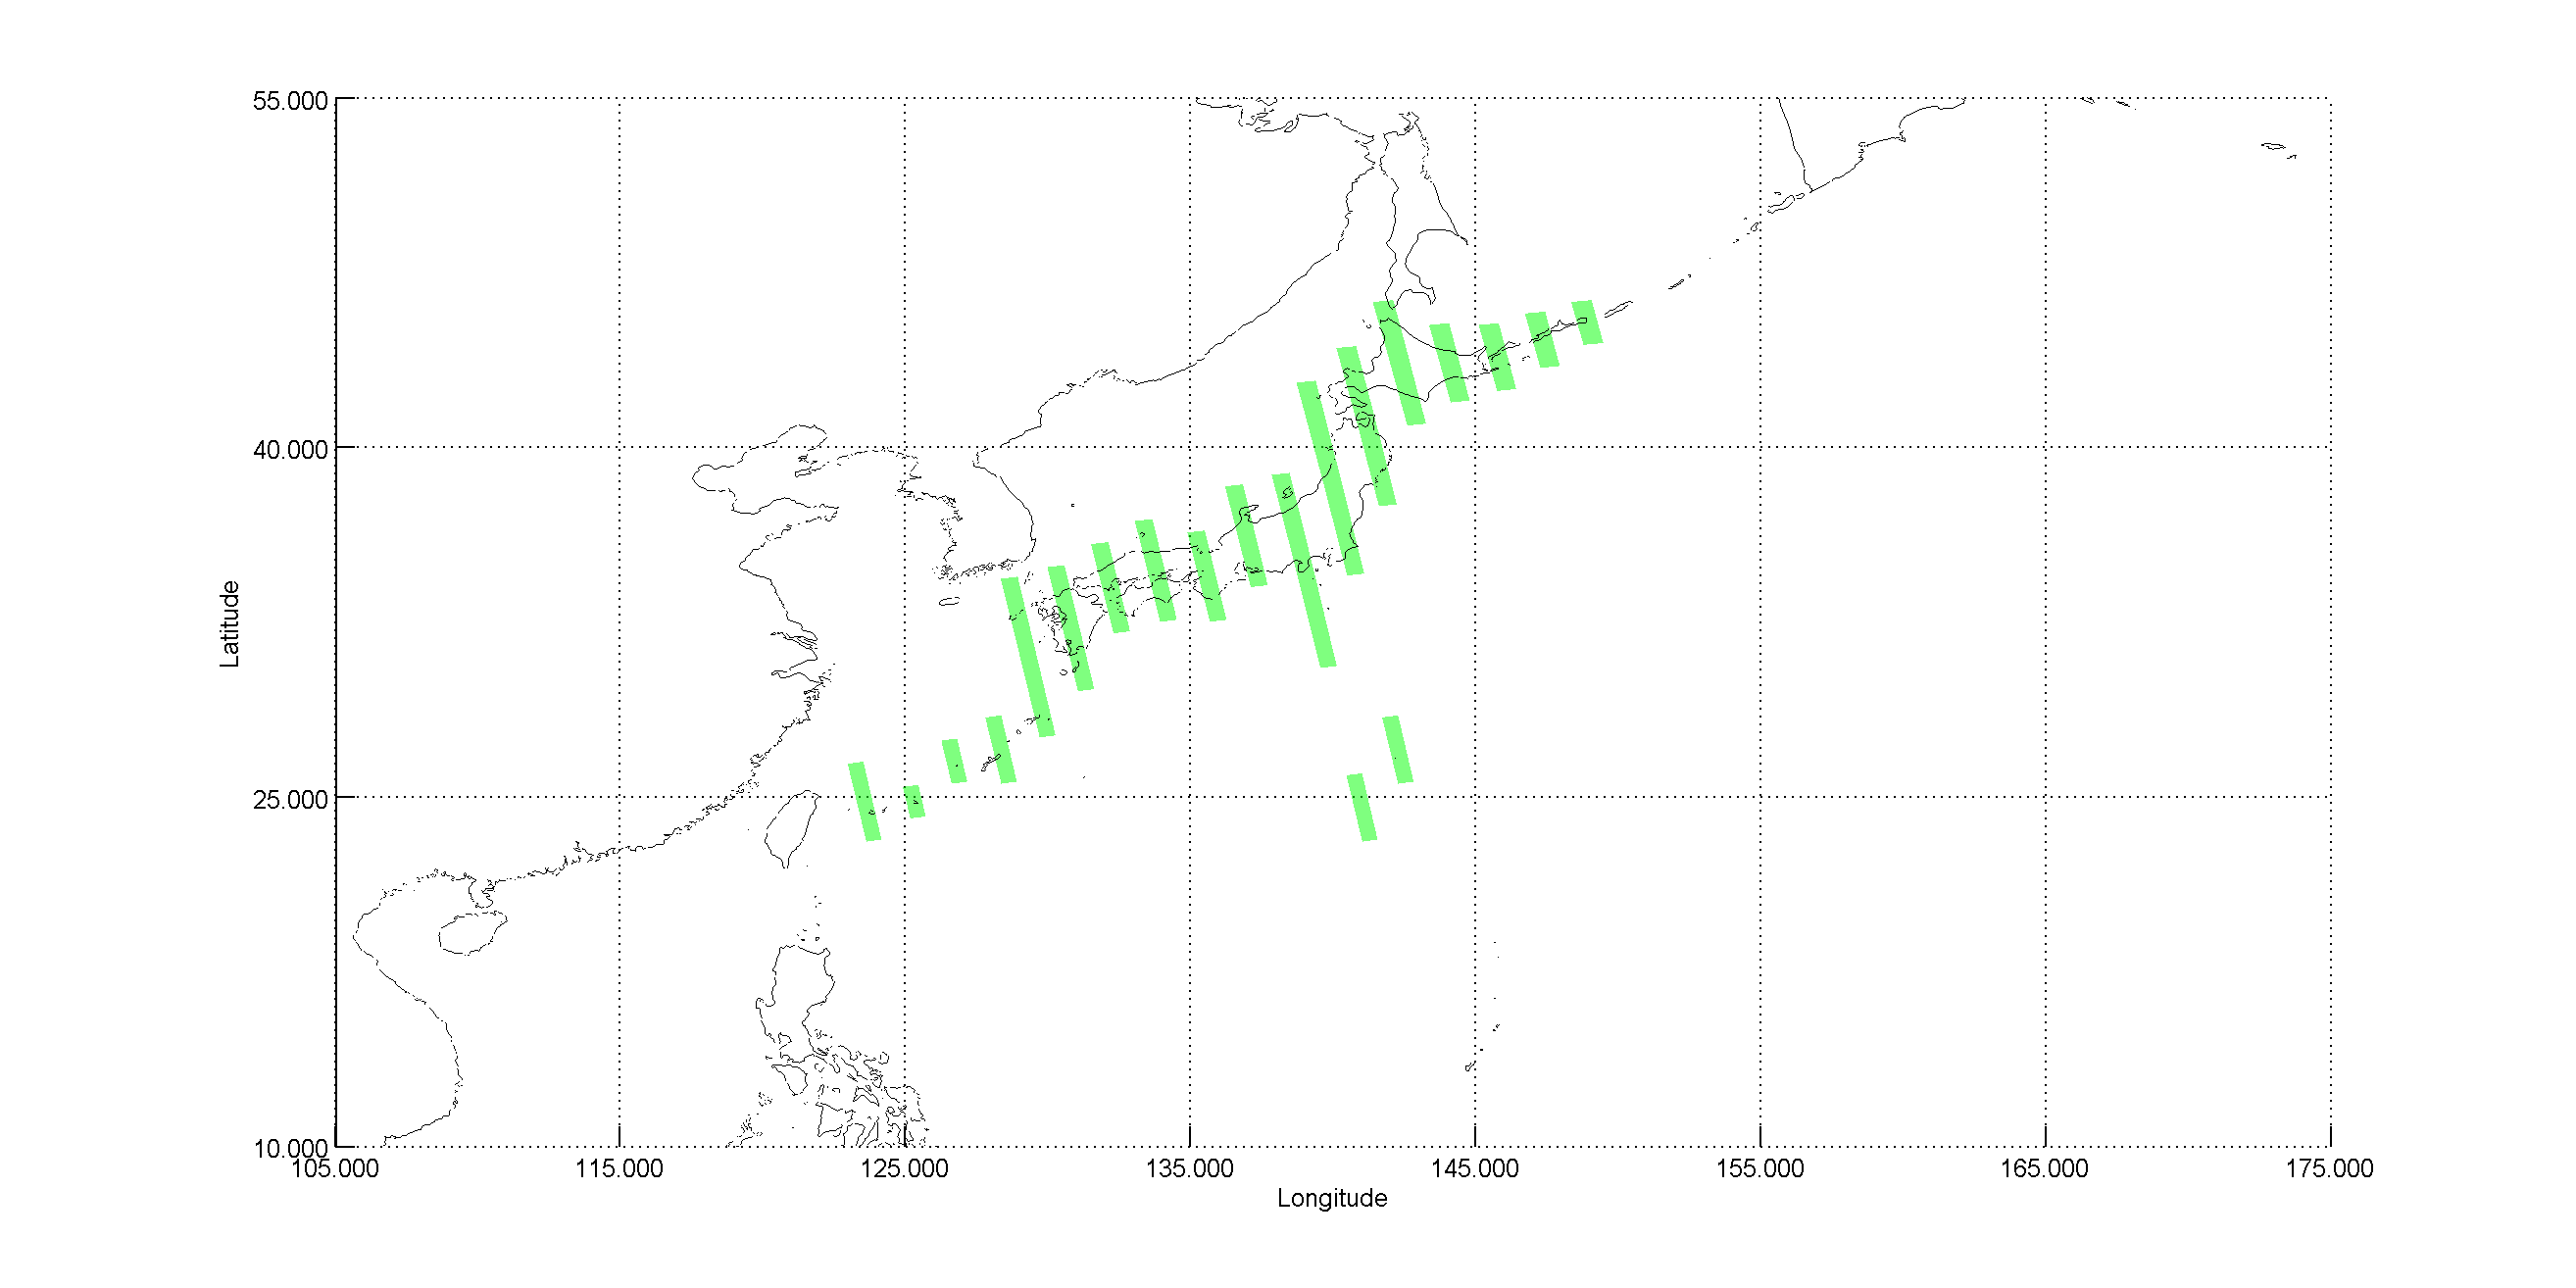 CYCLE_174 - Japan Ascending passes